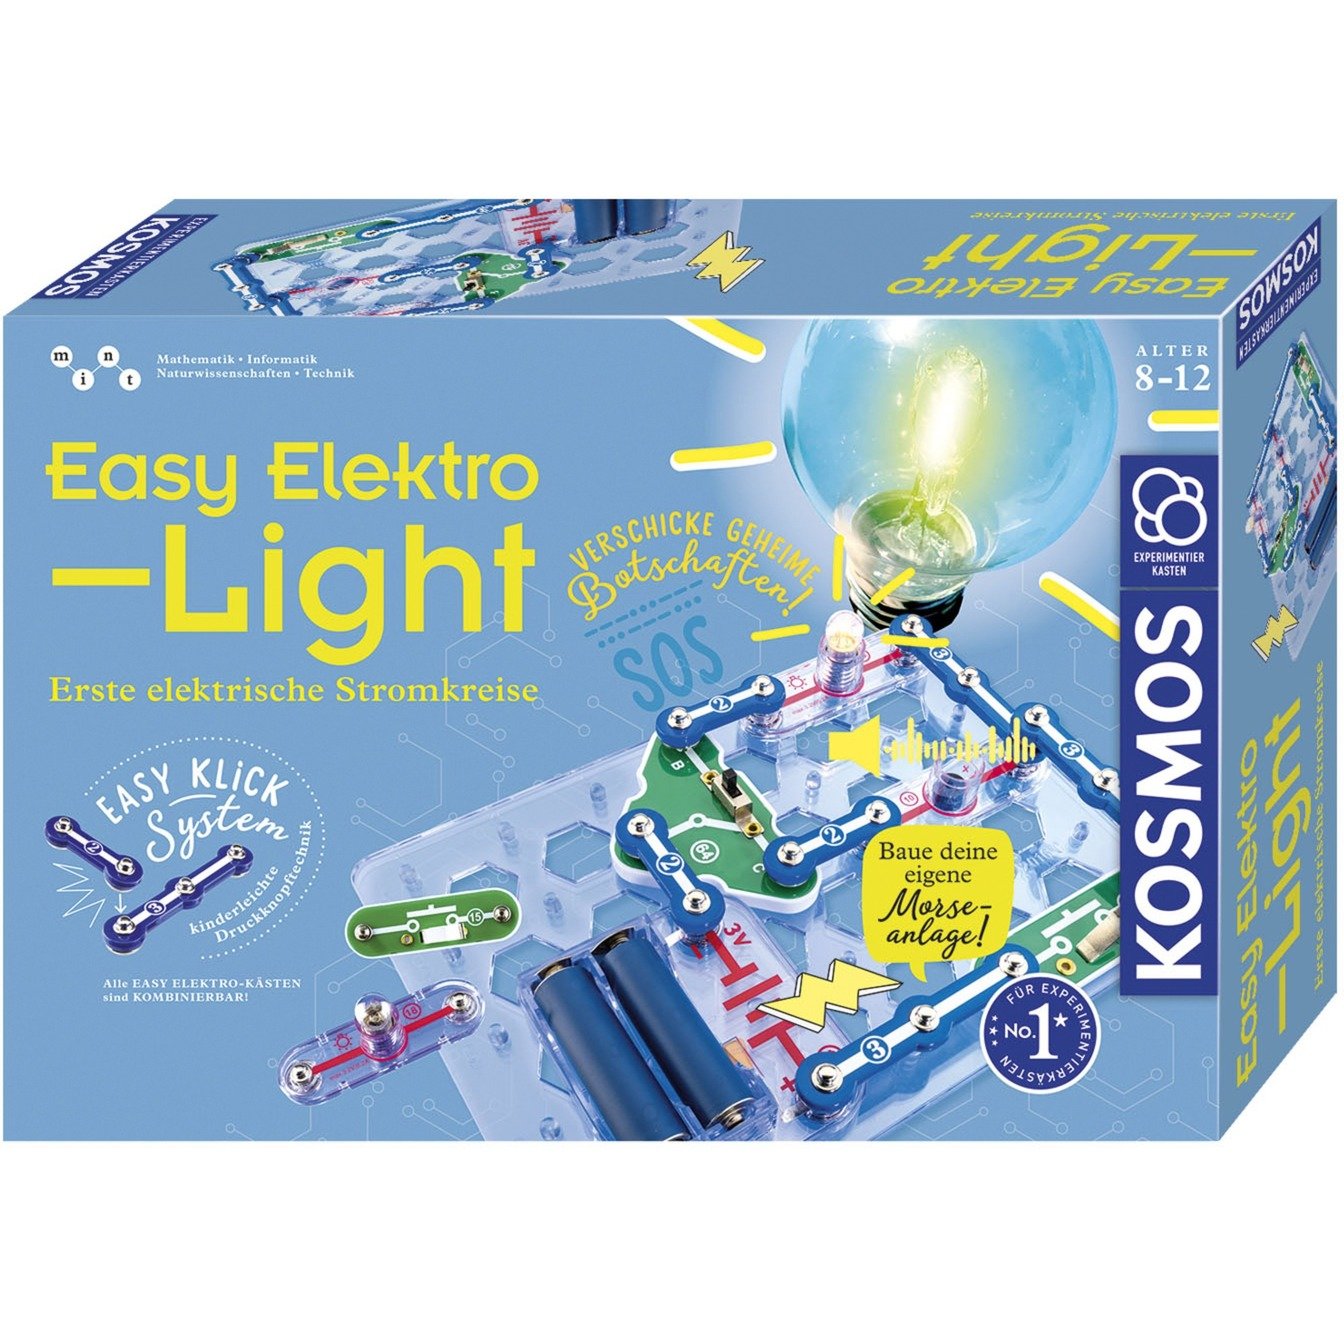 Easy Elektro - Light, Experimentierkasten von Kosmos